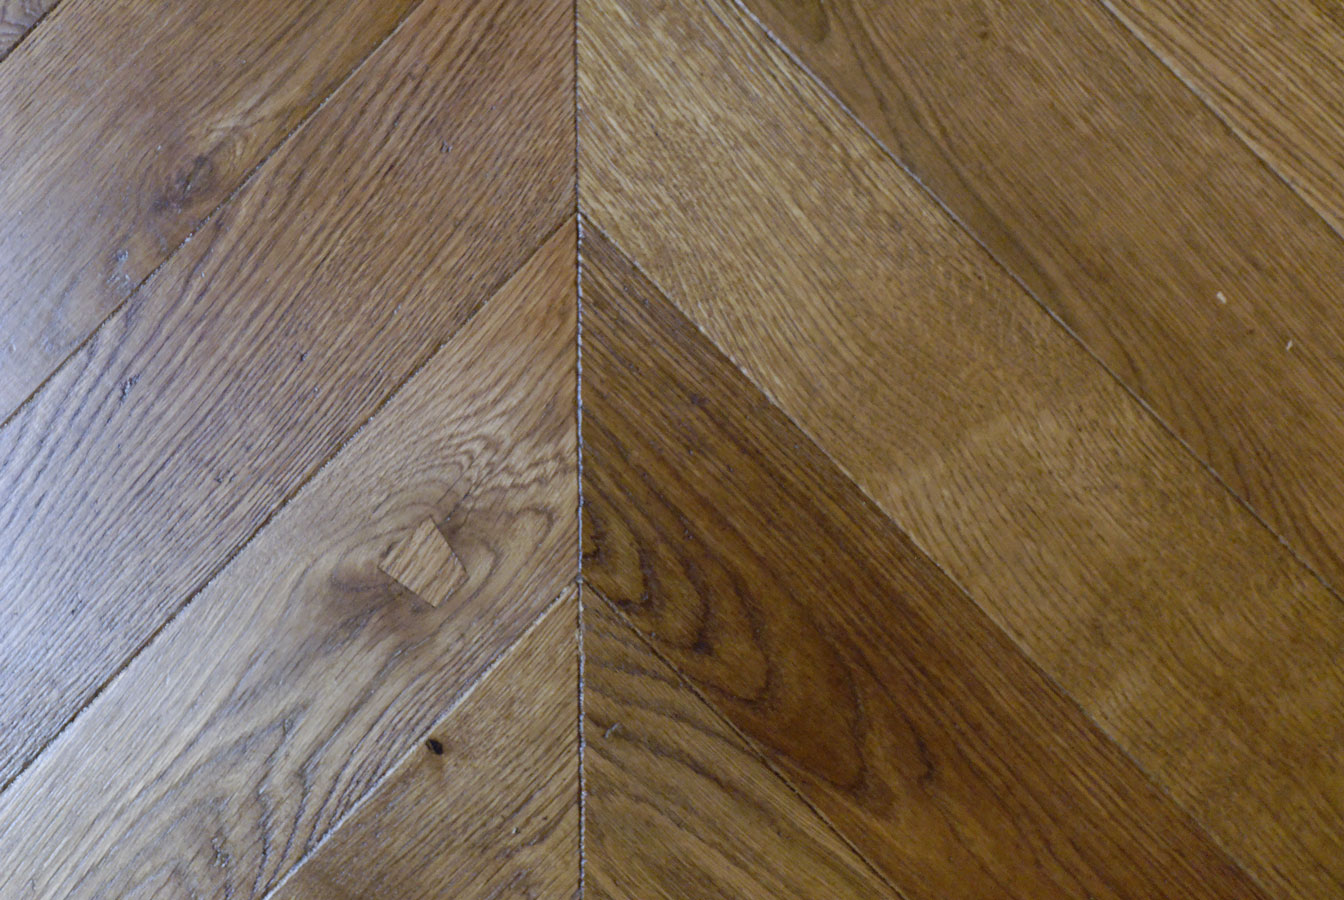 Chevron parquet floor in oak, thickness 14 mm